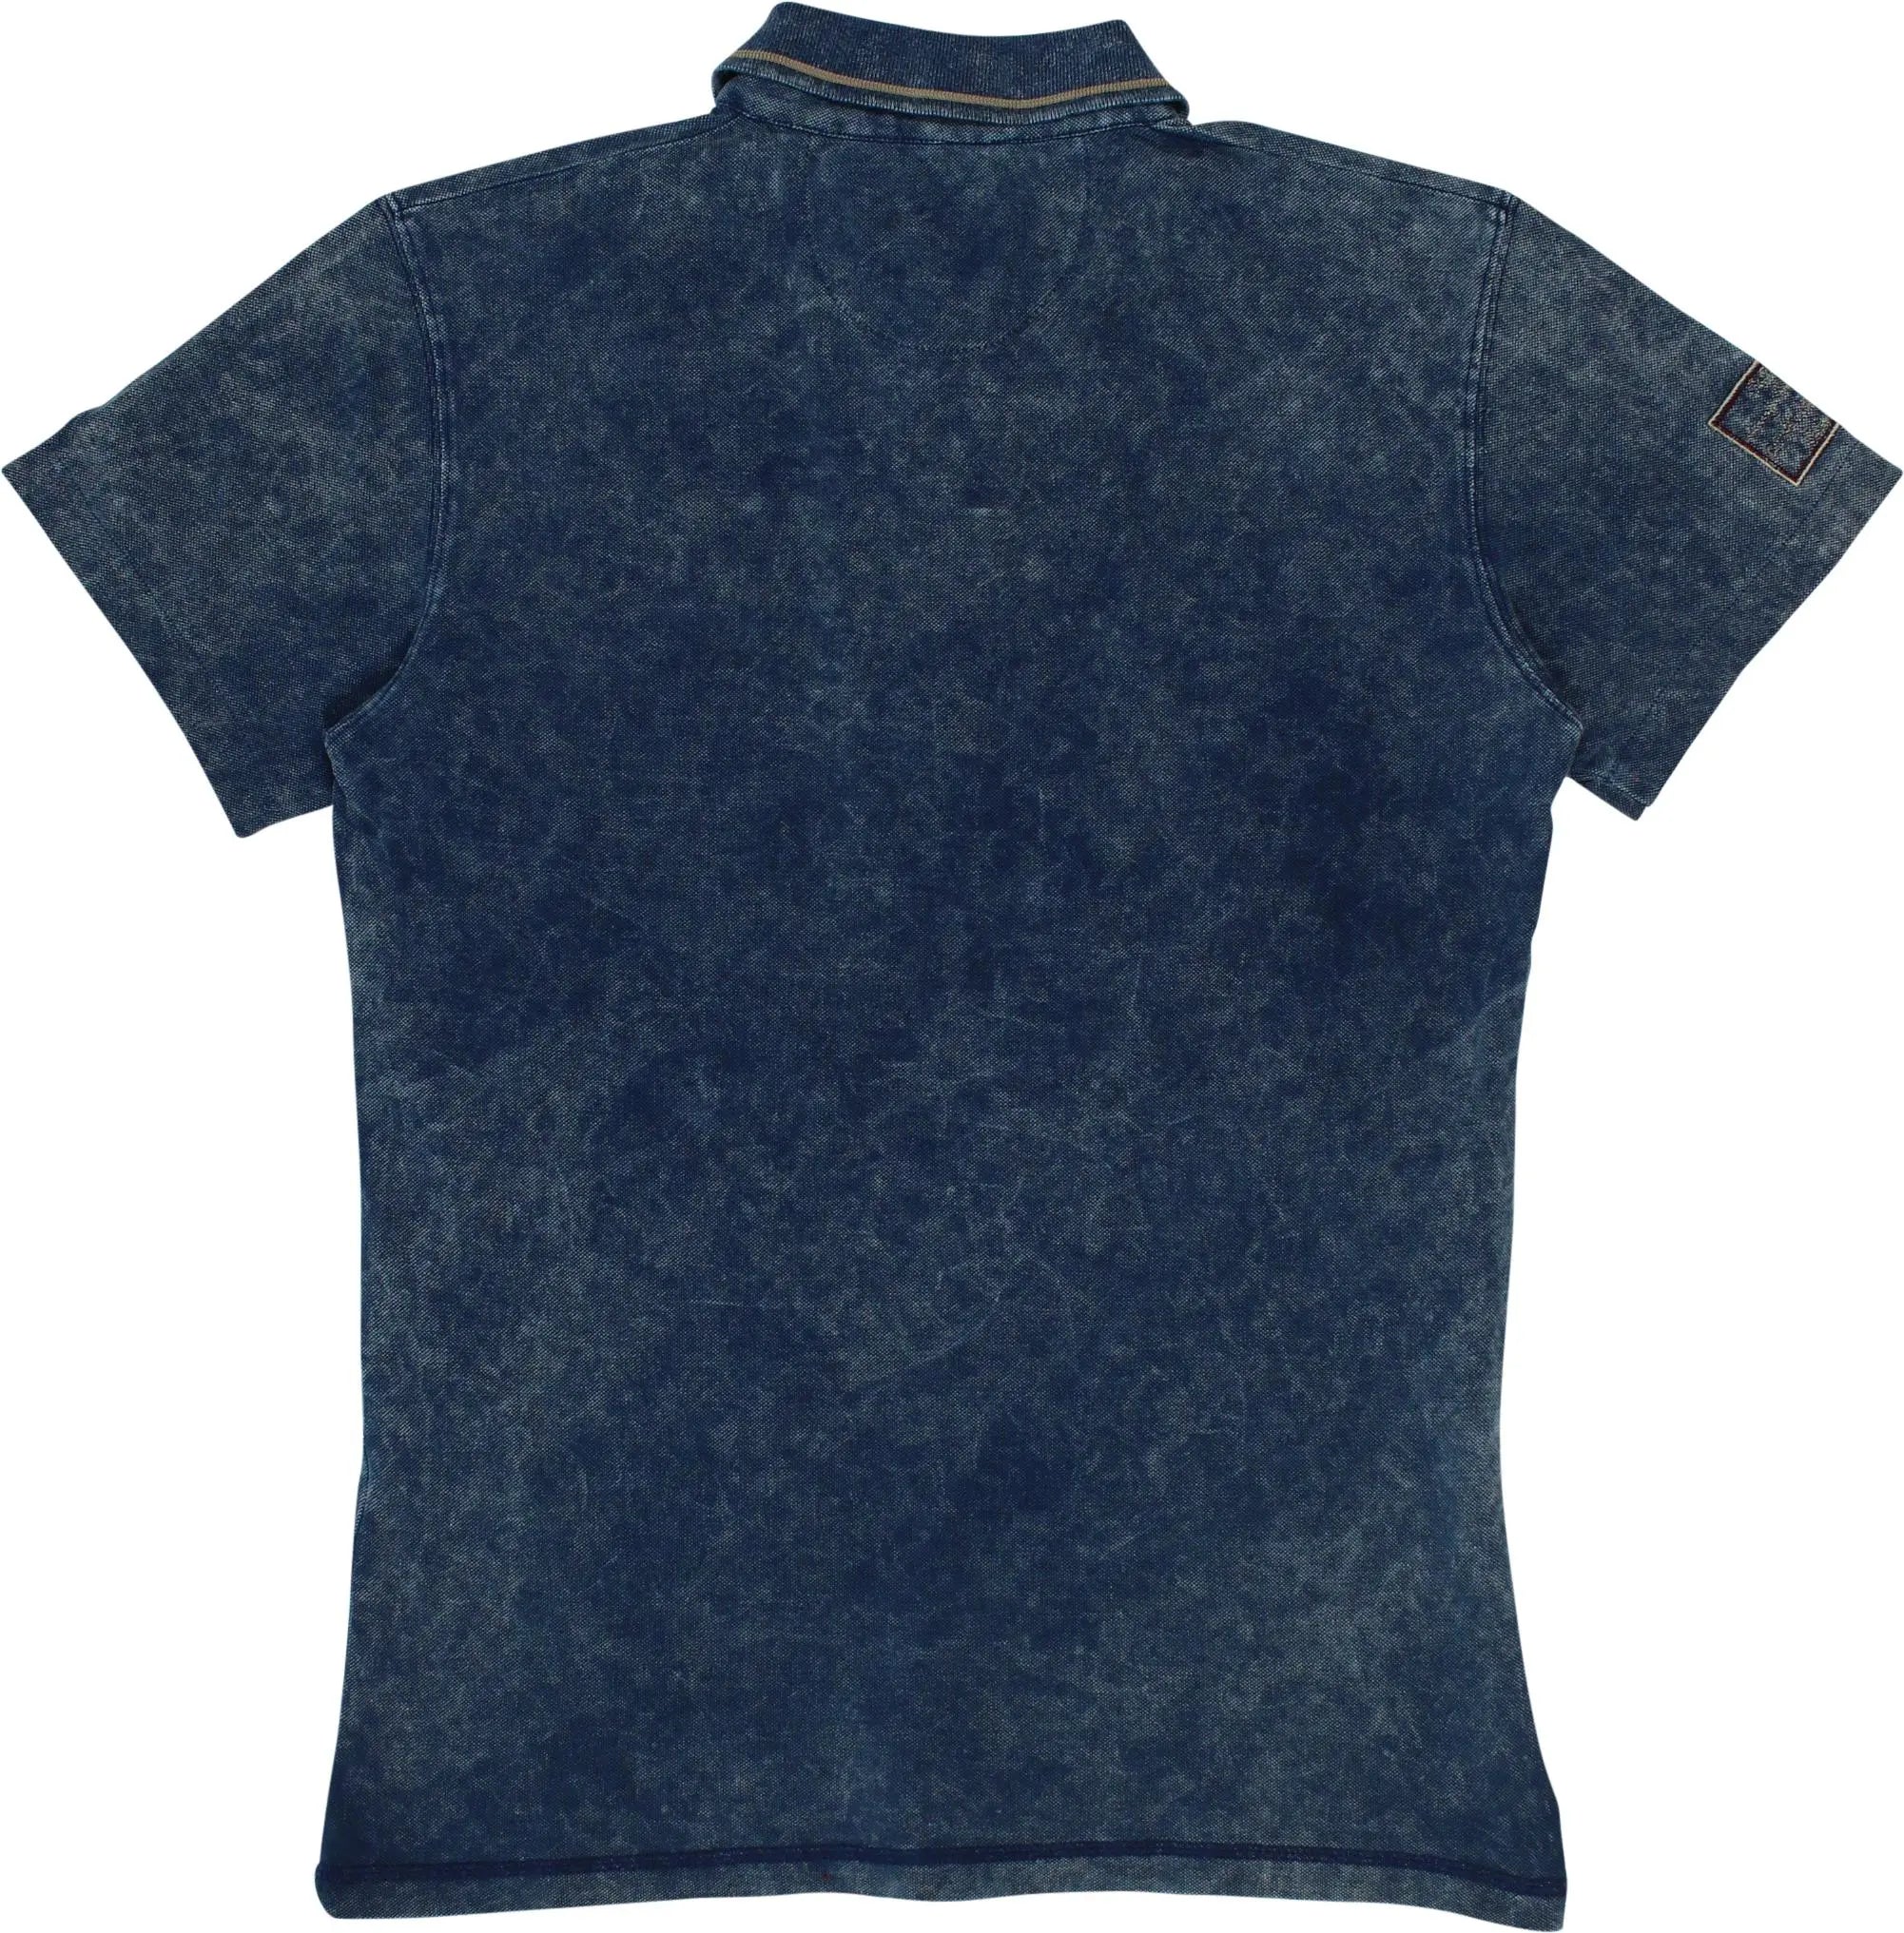 WAM Denim - Polo Shirt- ThriftTale.com - Vintage and second handclothing